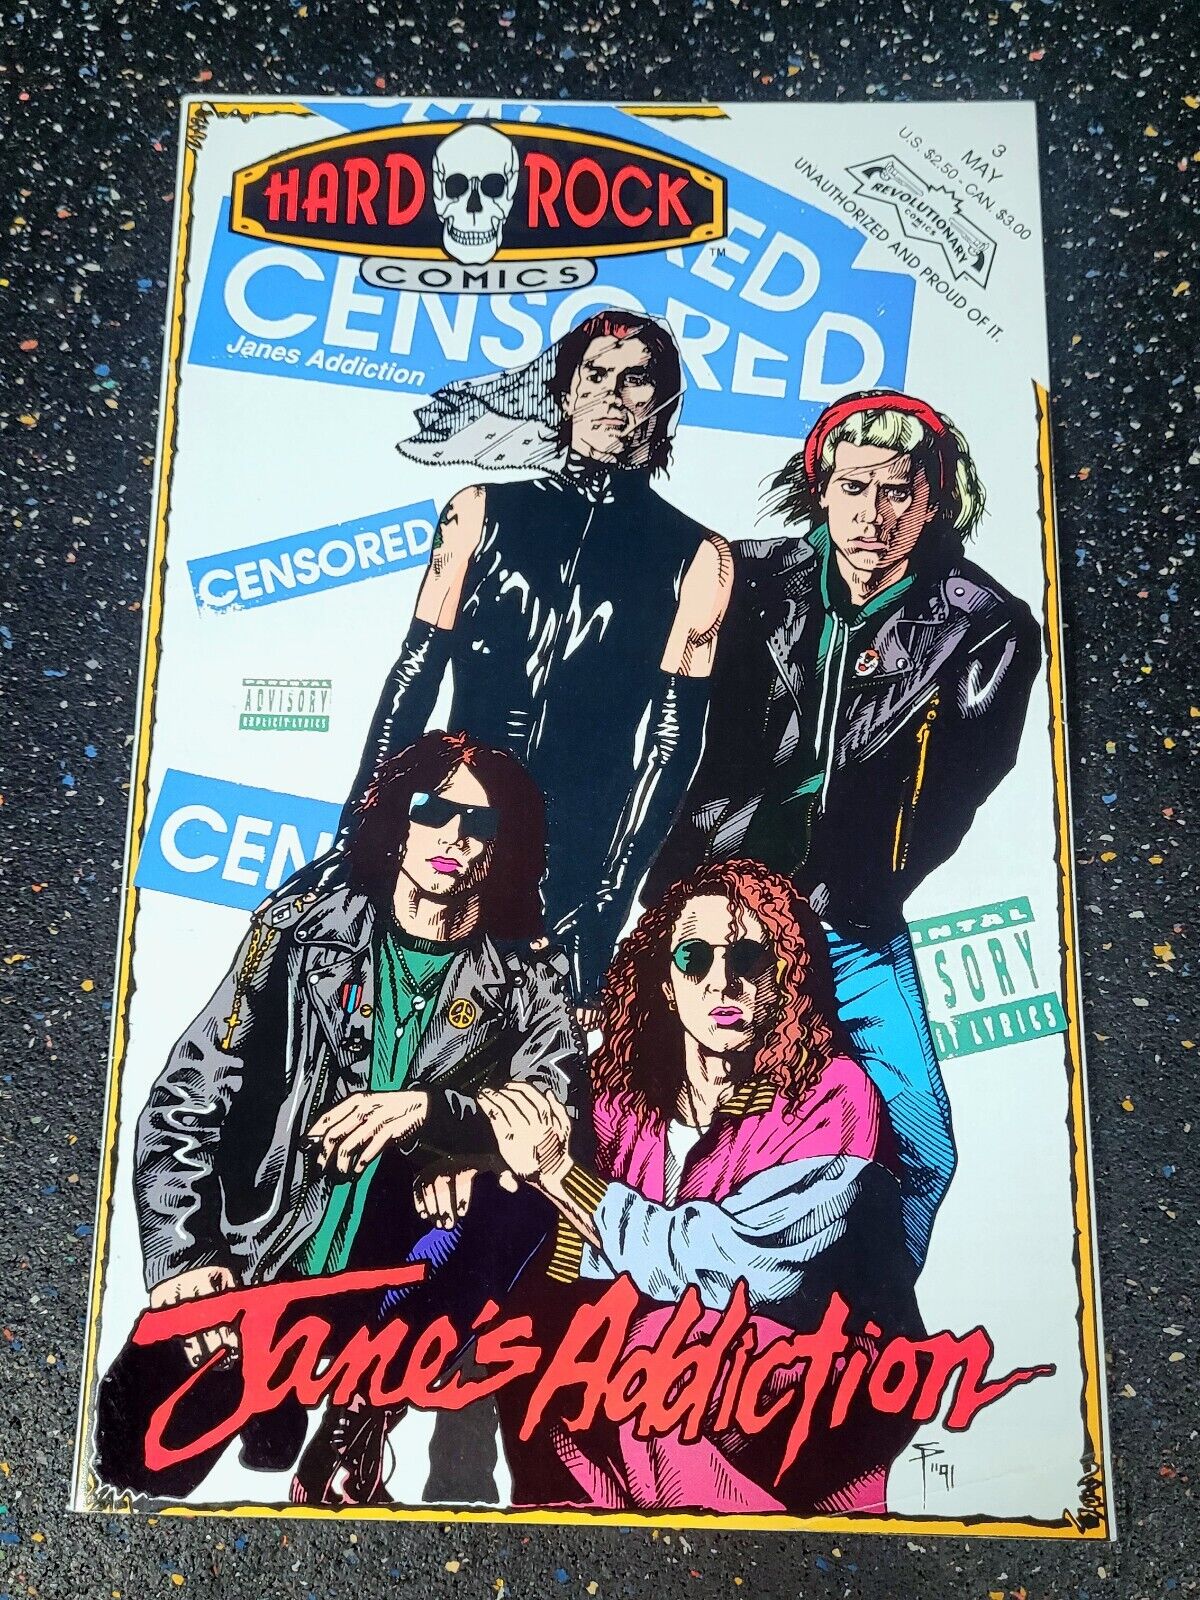 Hard Rock Comics #3 James Addiction (May 1992, Revolutionary Comics) 